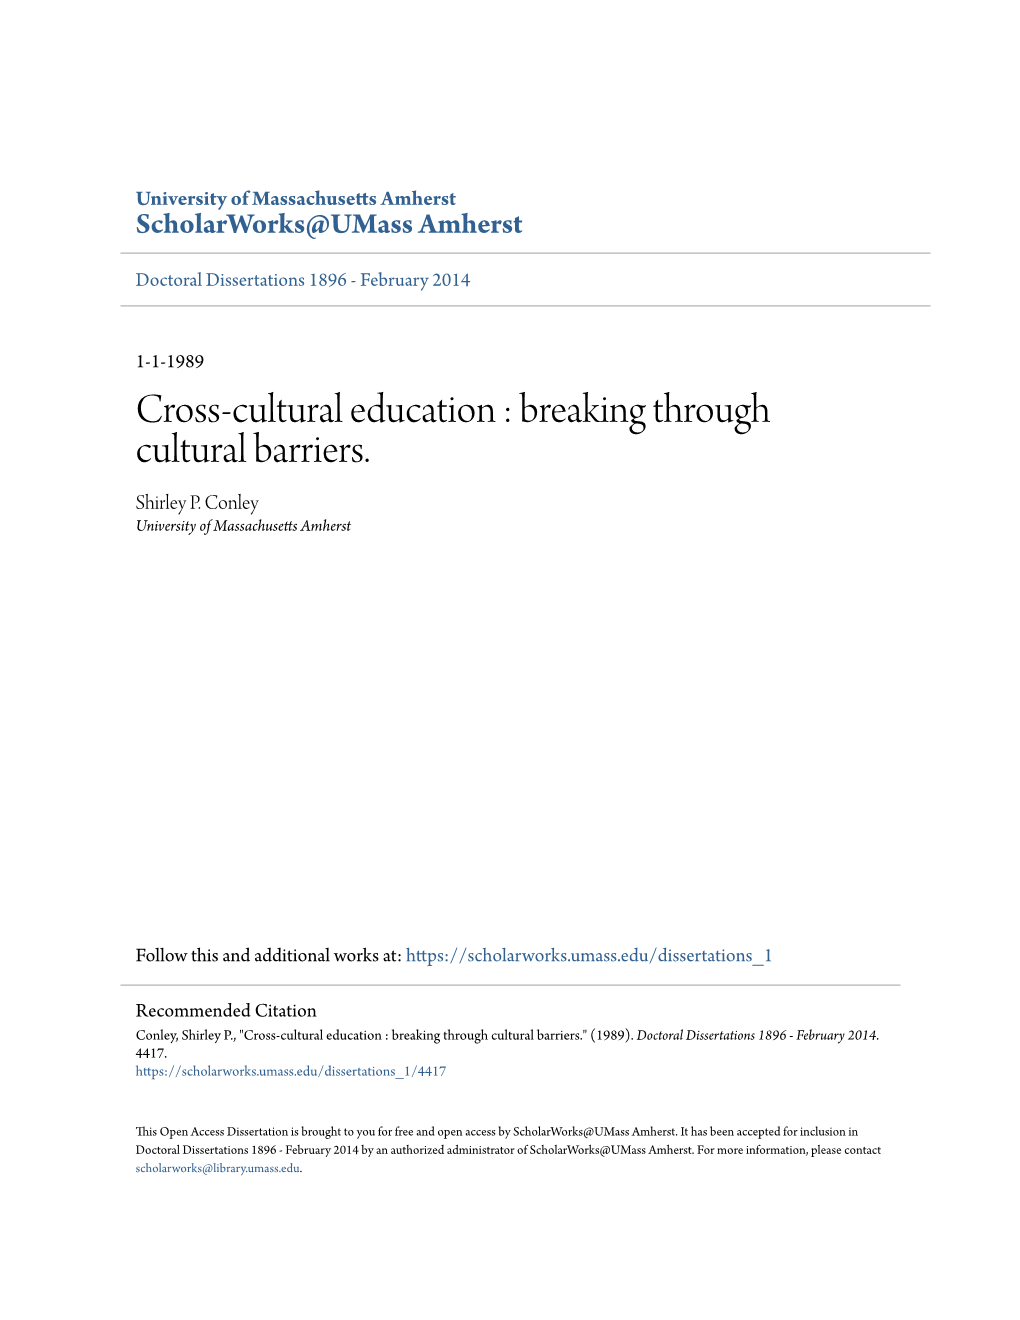 Cross-Cultural Education : Breaking Through Cultural Barriers